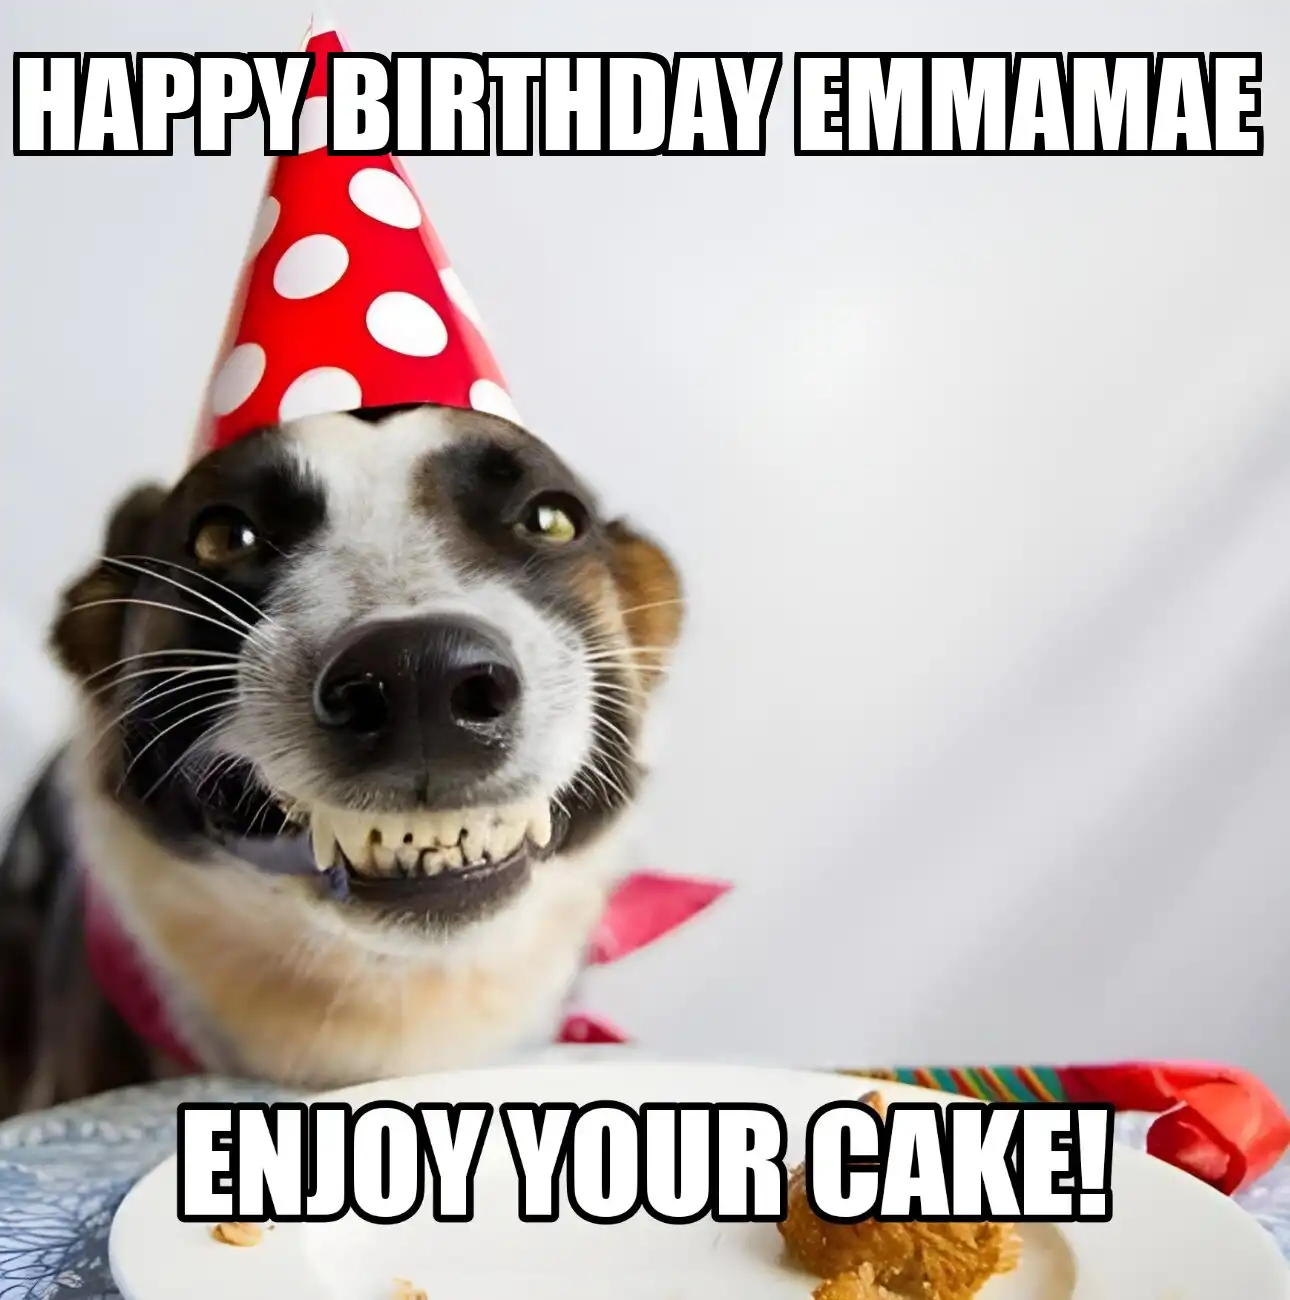 Happy Birthday Emmamae Enjoy Your Cake Dog Meme